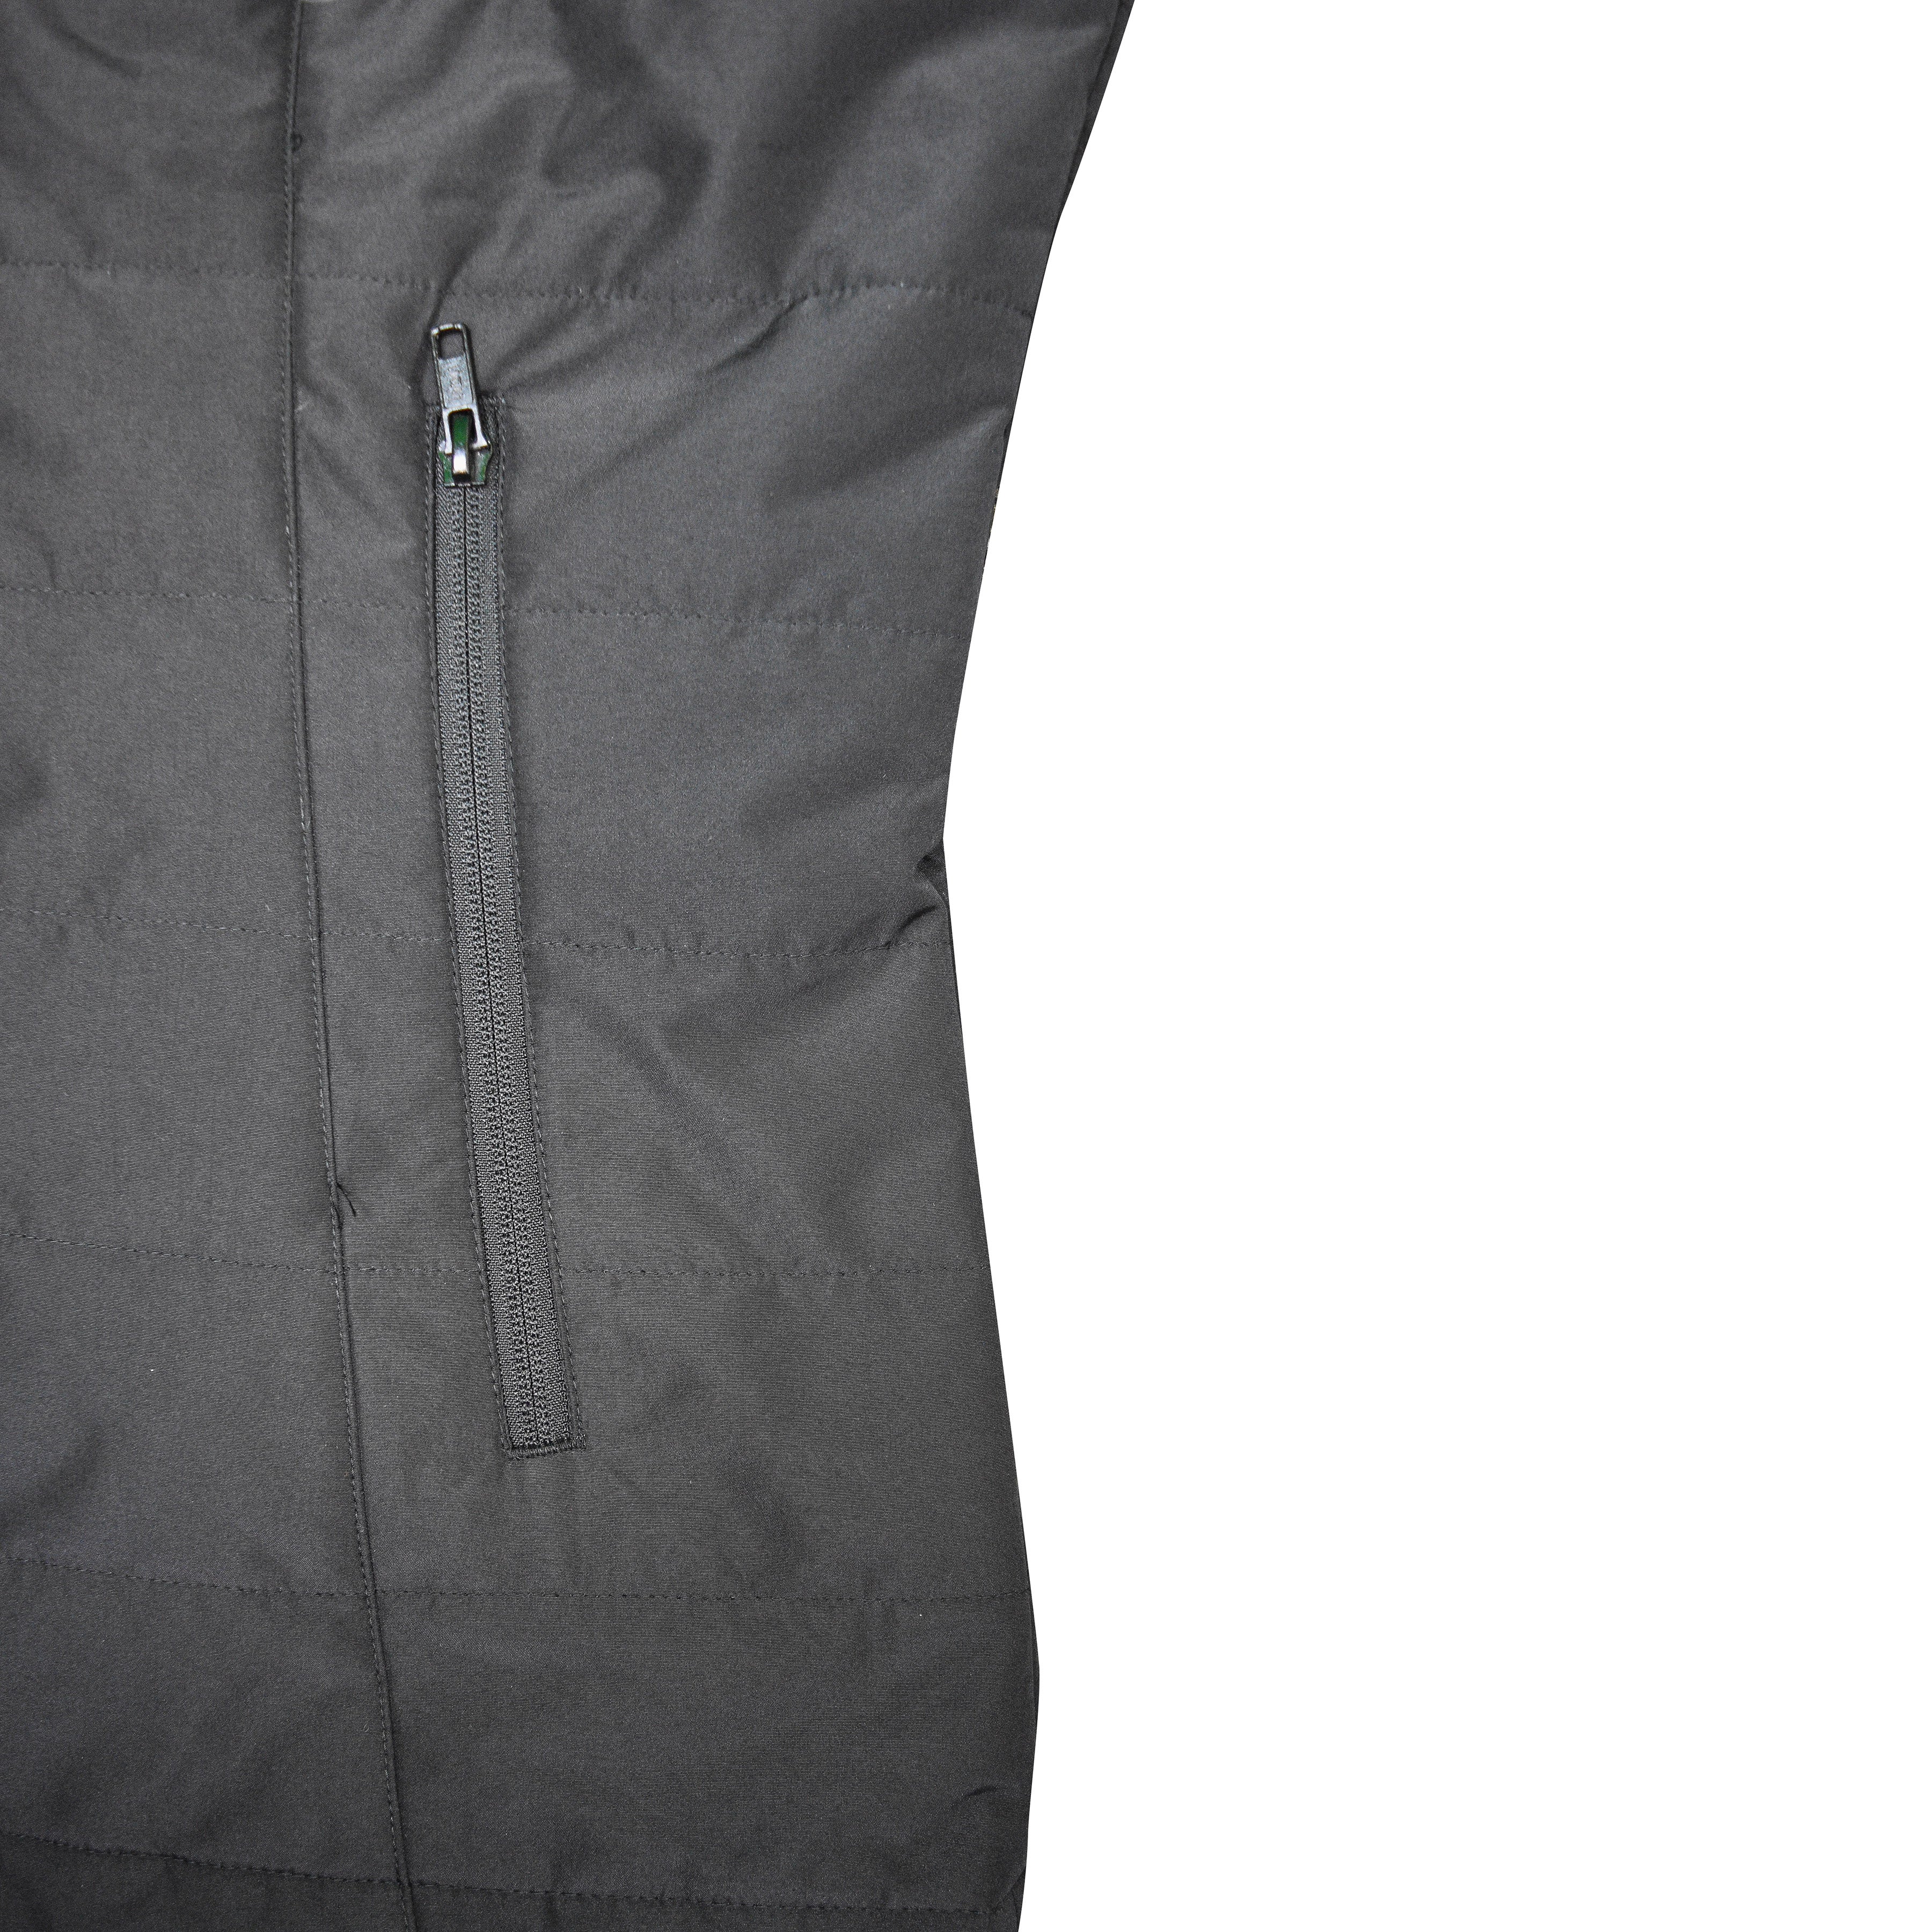 DeWalt DCHJ077D1 Black Quilted Women's Heated Jacket Kit